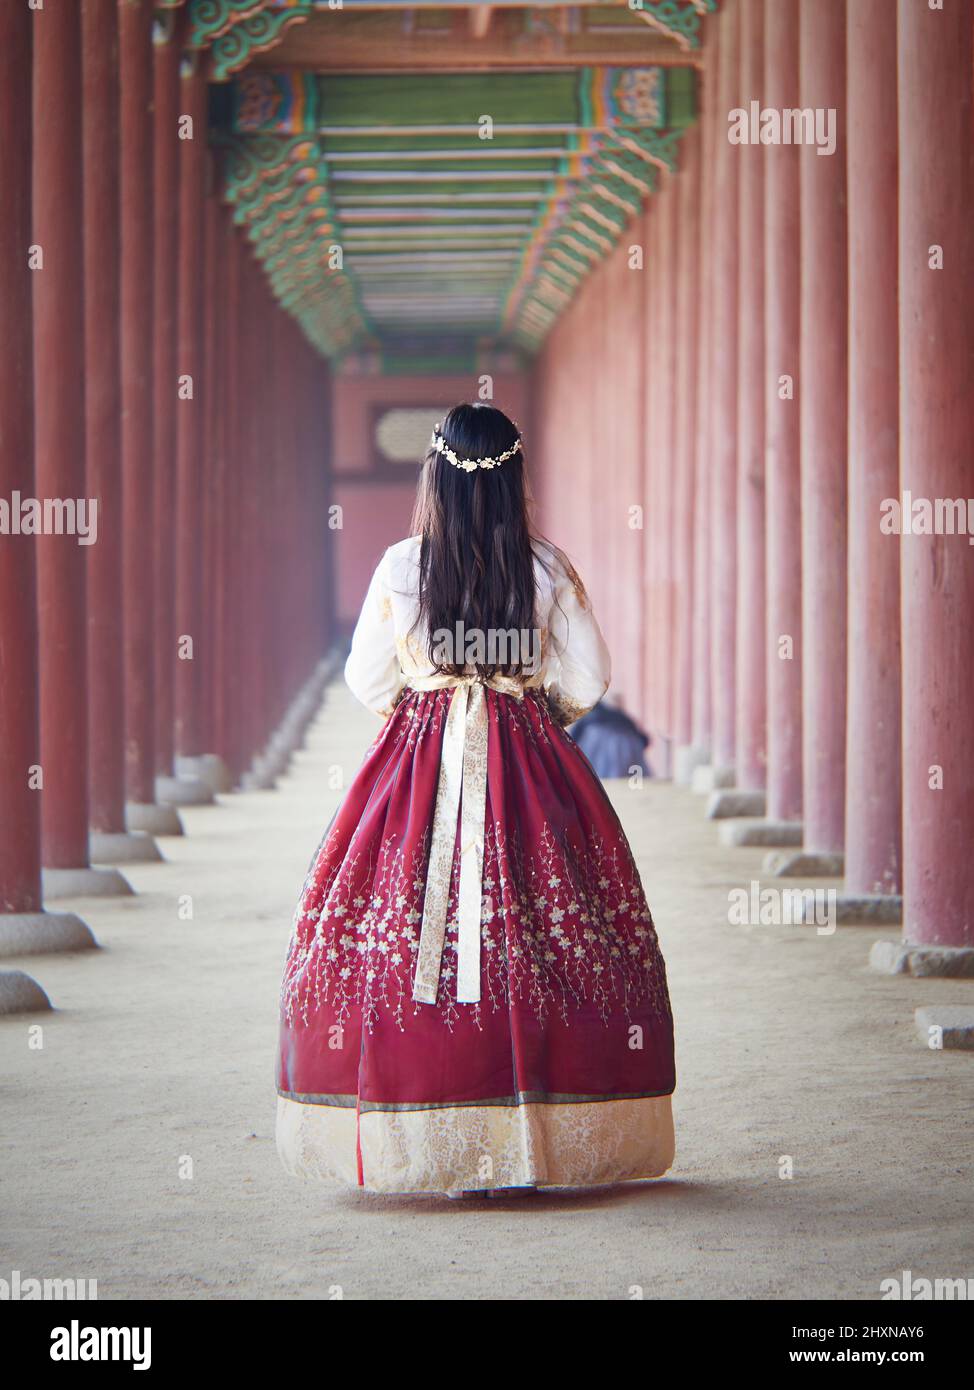 Girls in Korean traditional dress, Hanbok in Kyungbok Palace, Seoul, South Korea Stock Photo